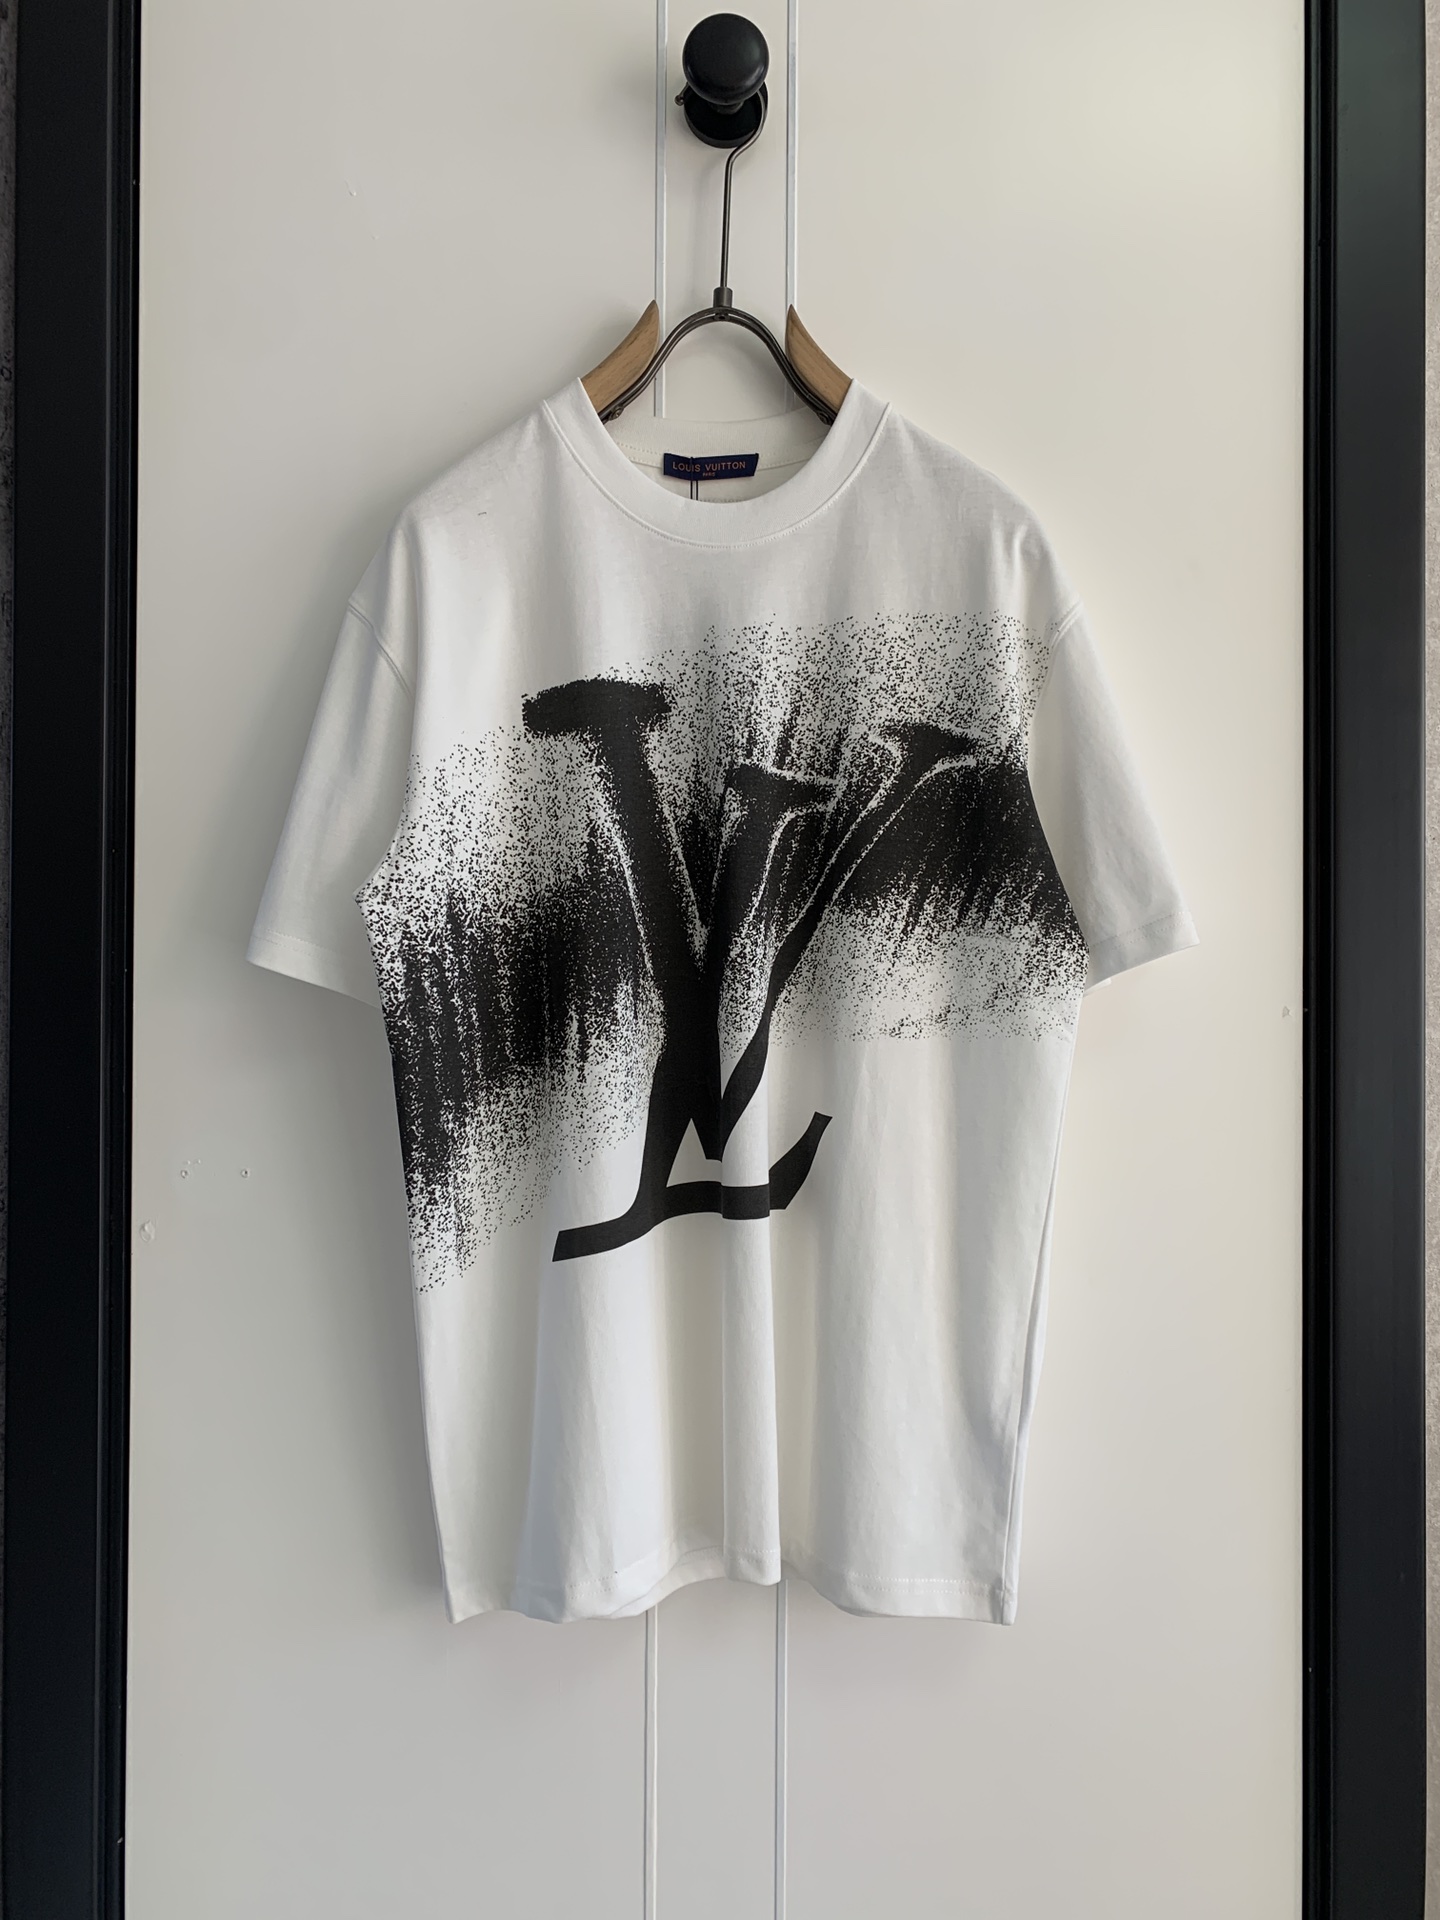 Louis Vuitton Clothing T-Shirt Black White Printing Cotton Fashion Short Sleeve